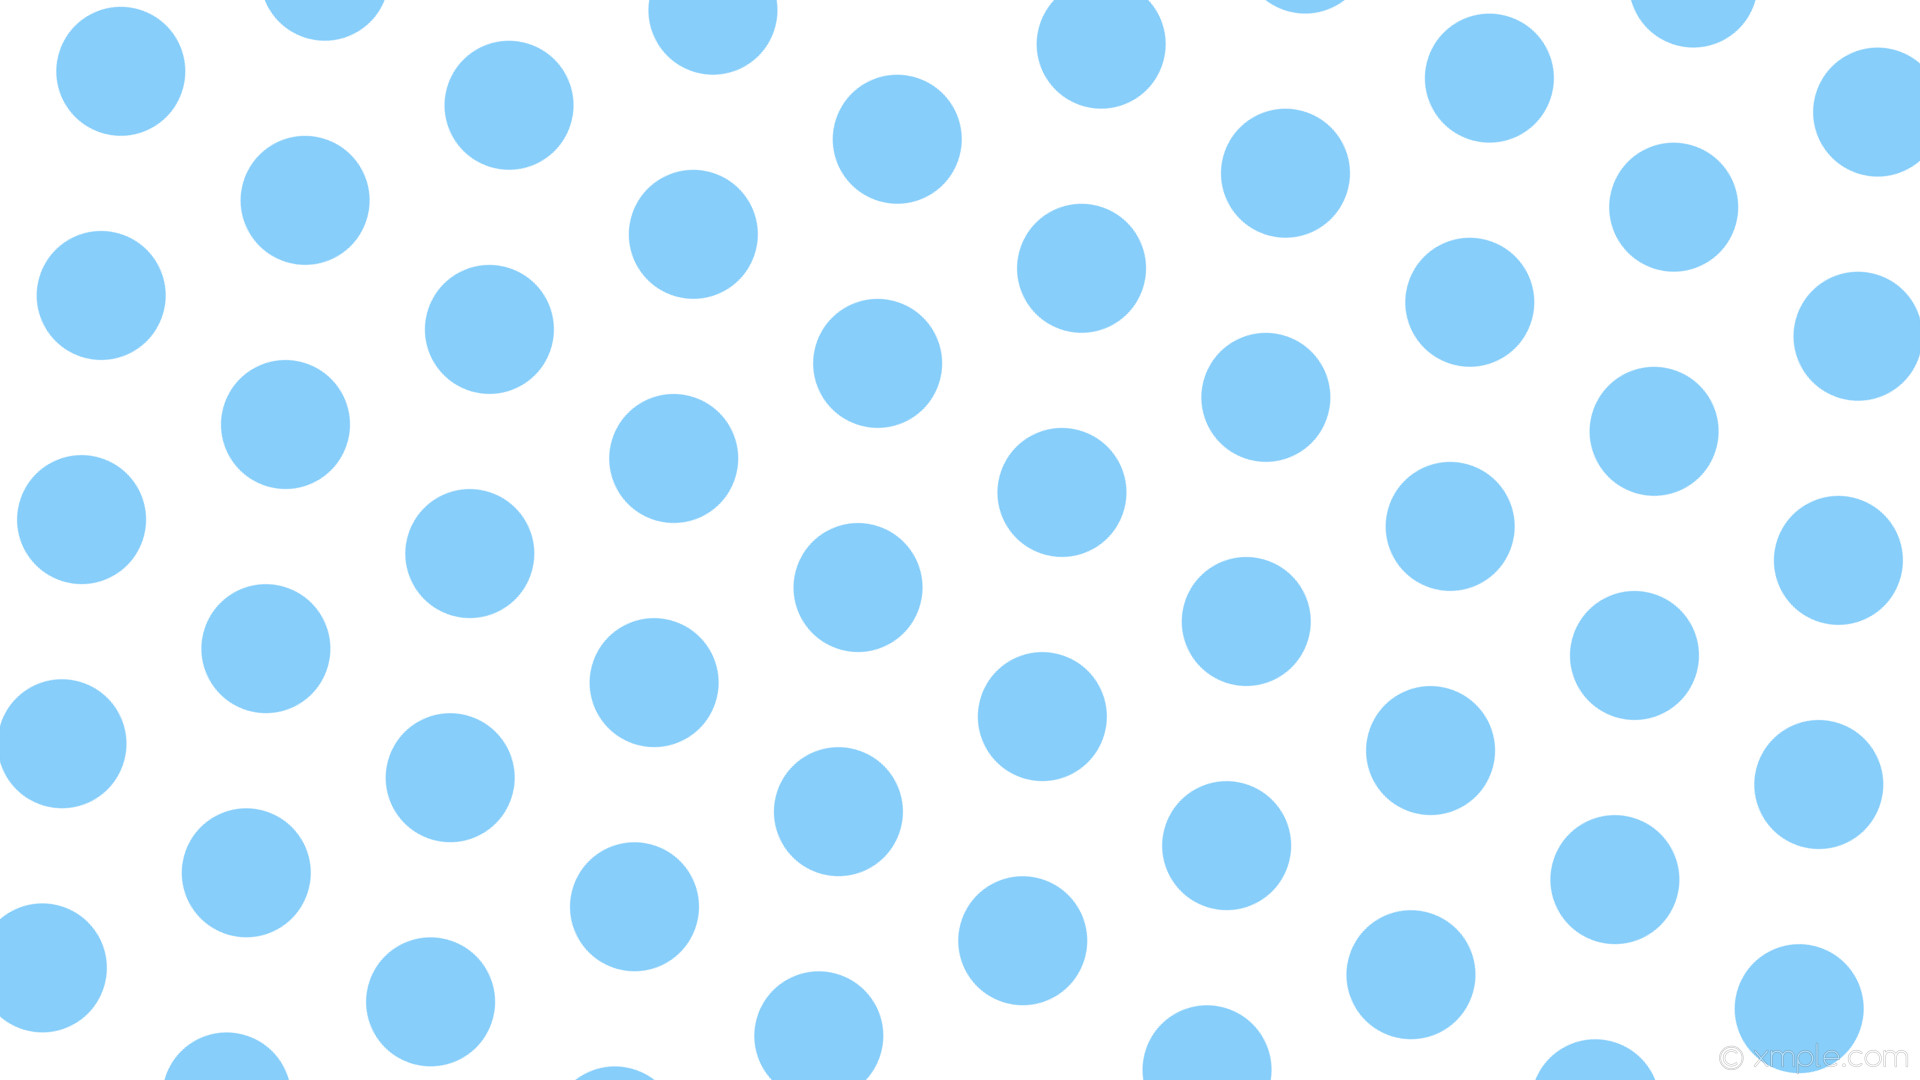 10. Blue and White Polka Dot Nail Art - wide 4